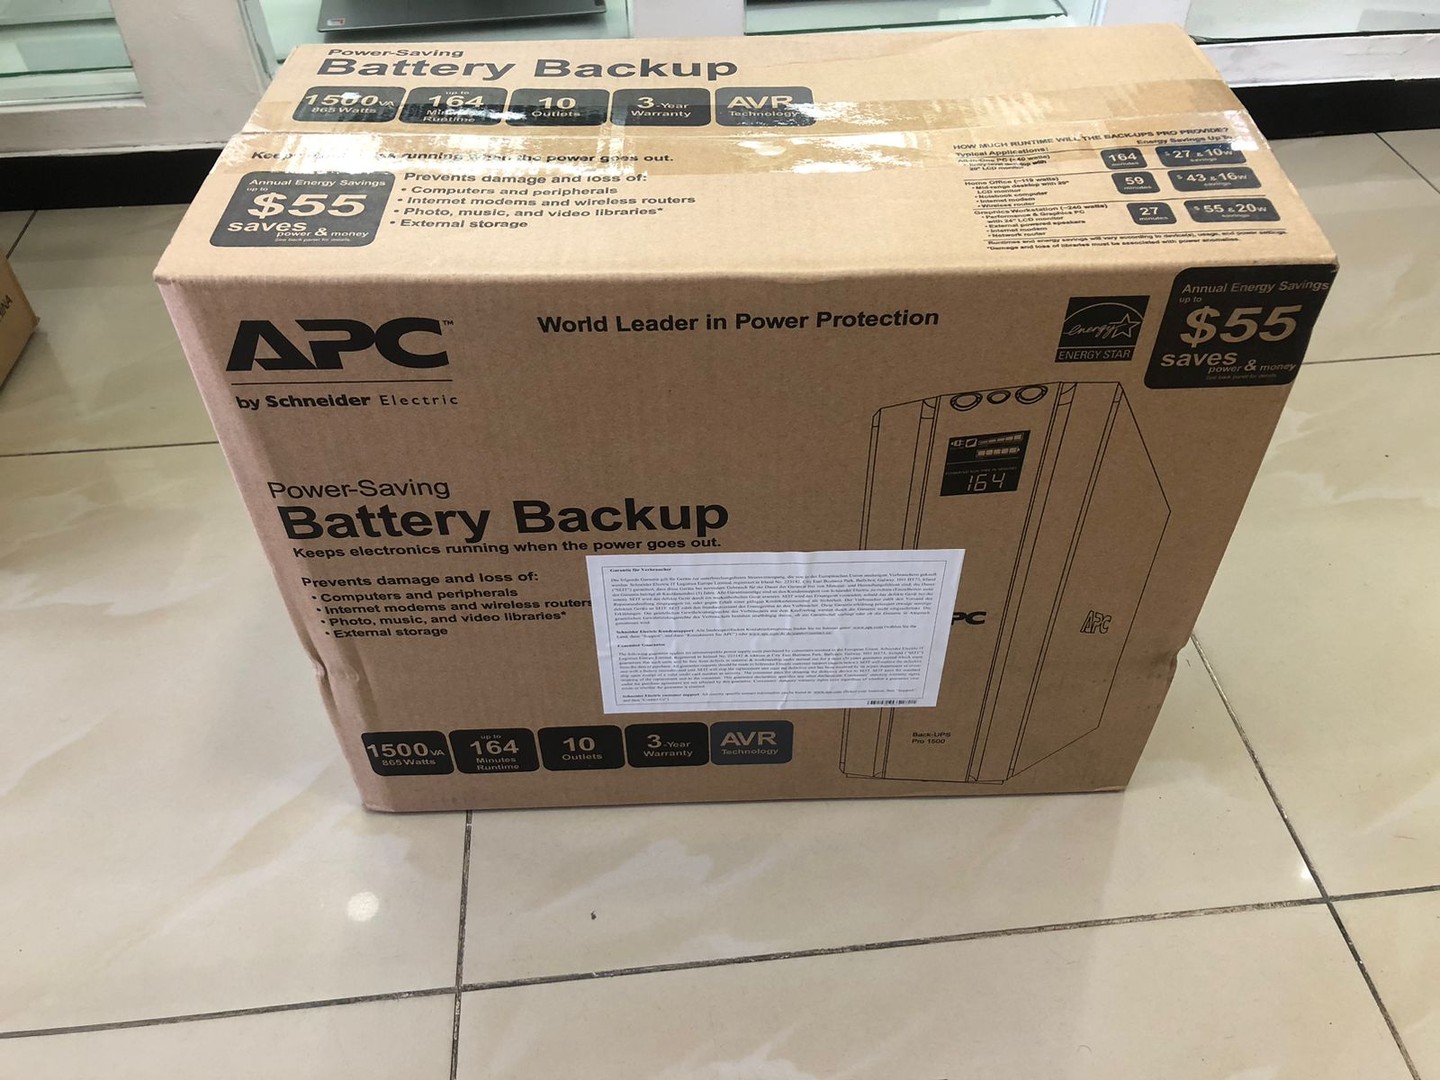 otros electronicos - UPS APC 1500G - 1500VA - 865 Walts - Battery Backup 2